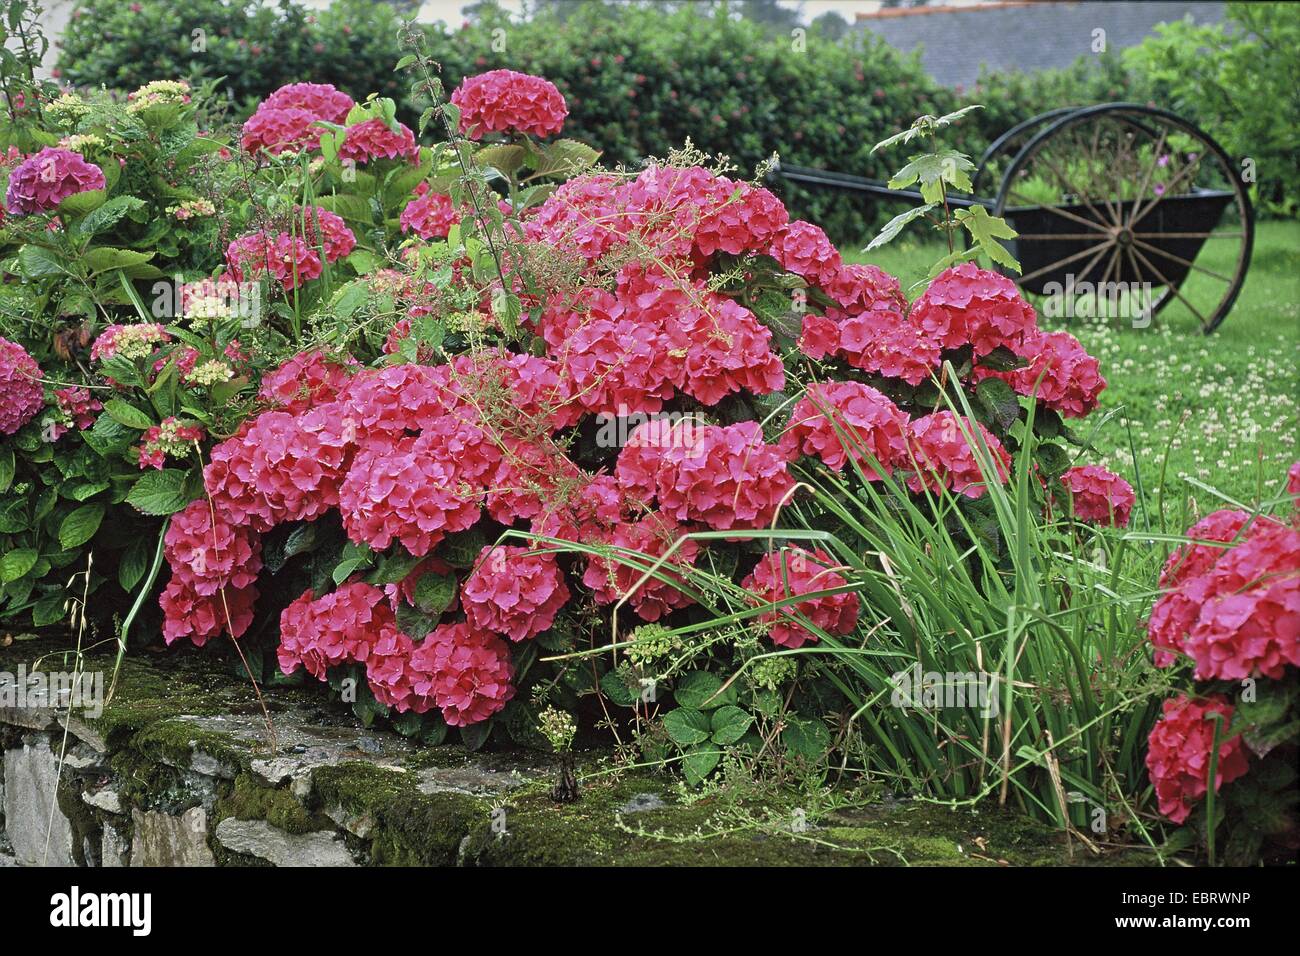 Hortensia jardin dentelle, cap hortensia (Hydrangea macrophylla 'Masja', Hydrangea macrophylla Masja), le cultivar Masja, blooming Banque D'Images